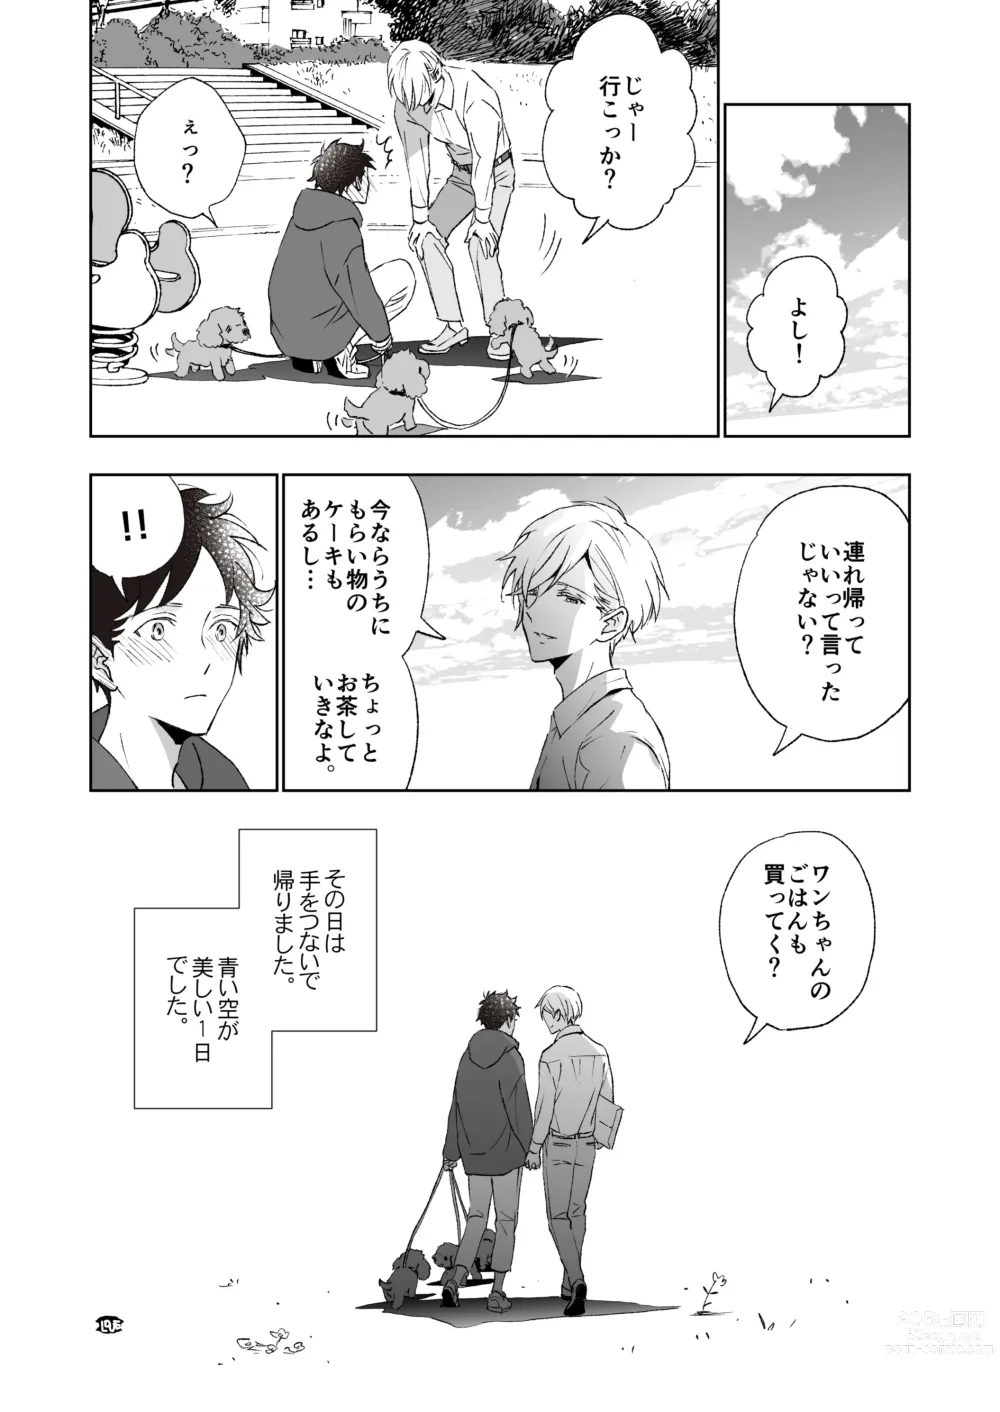 Page 14 of doujinshi Torotoro na Futari